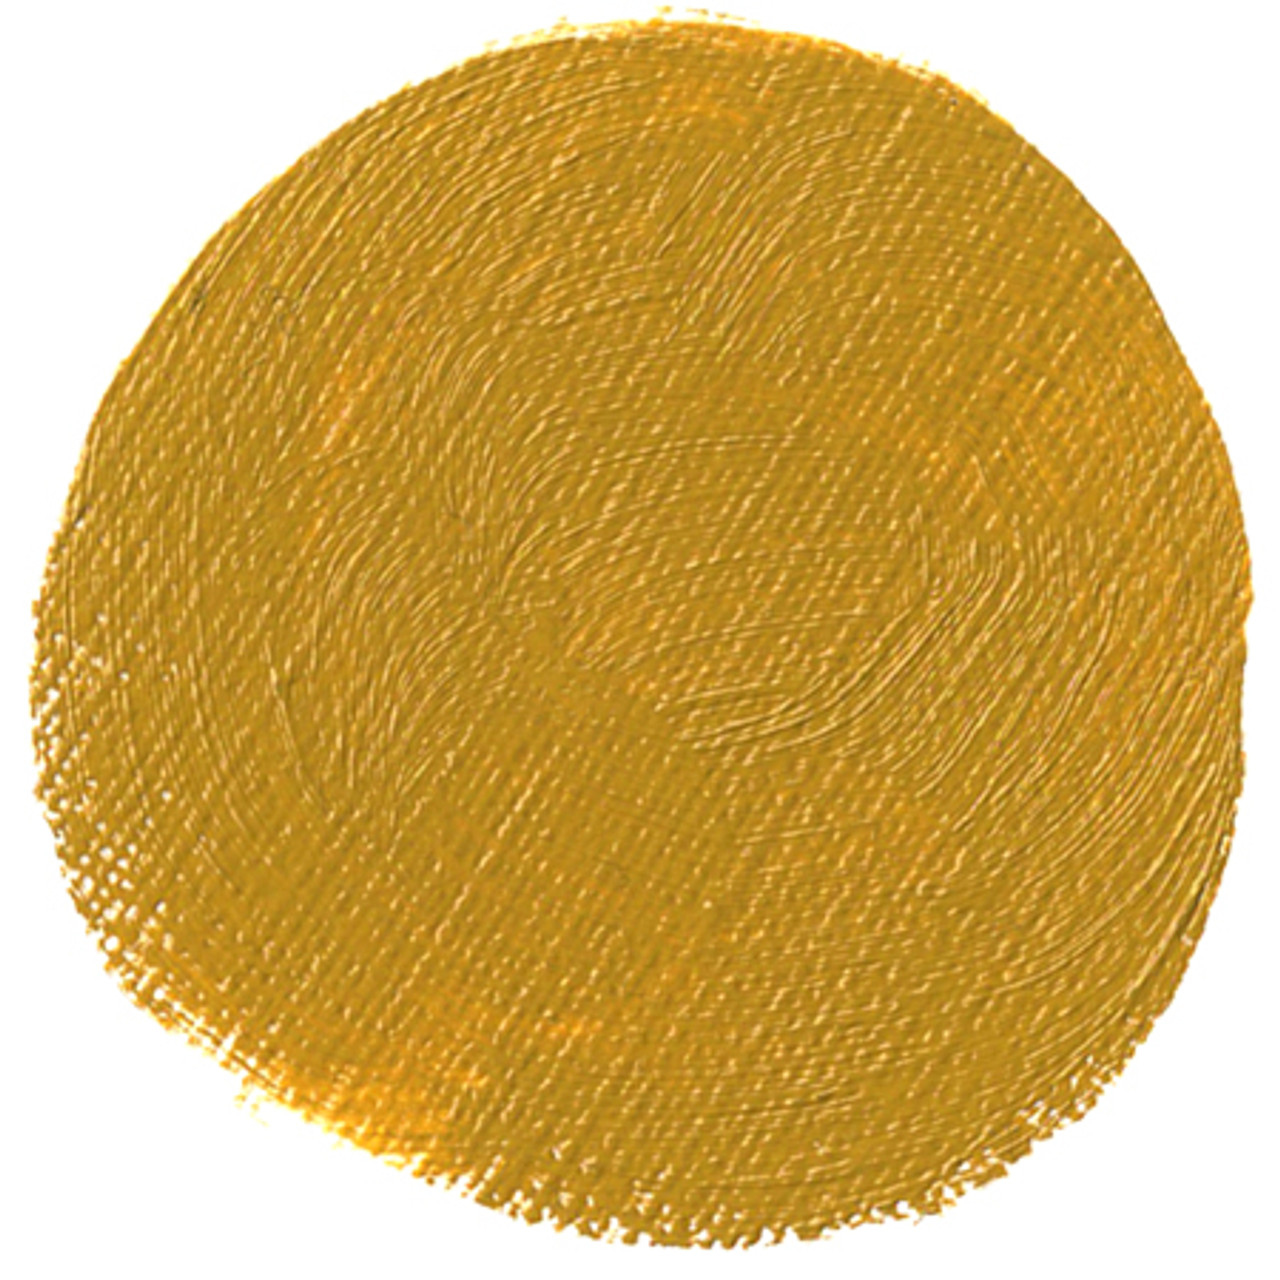 Yellow Ochre (37mL Oil Paint)